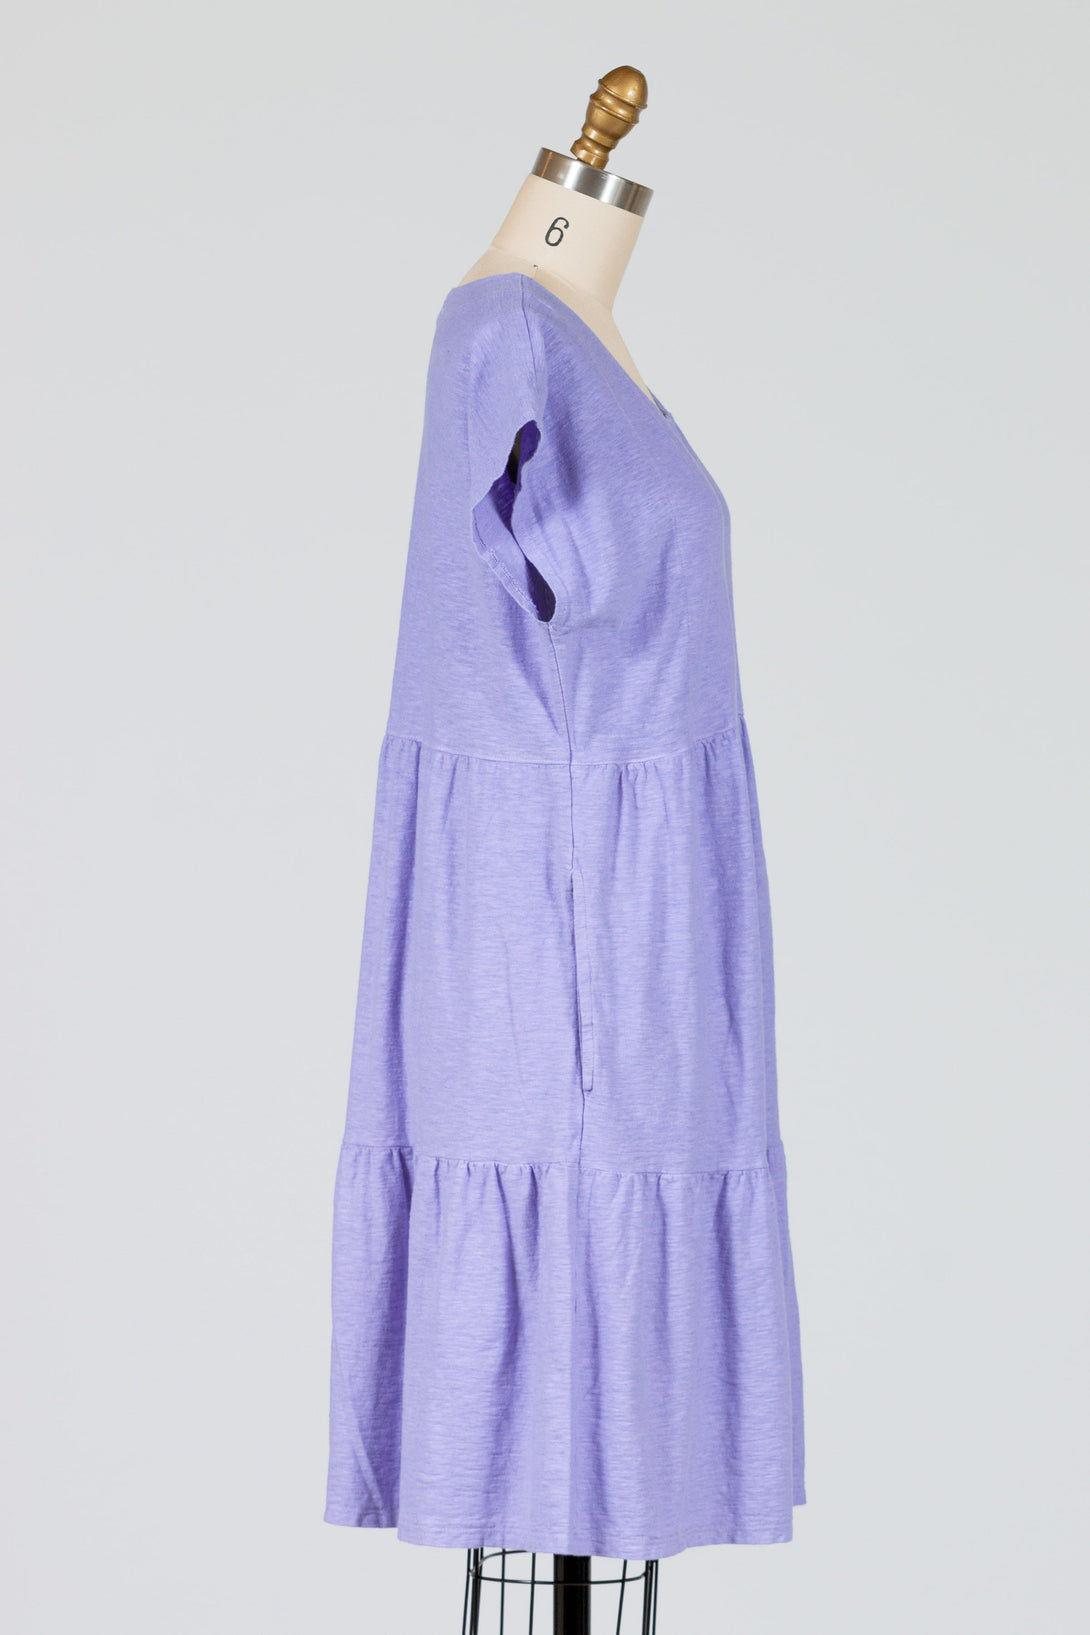 CutLoose-Tiered-Dress-Cotton-Linen-Knit-Lavender-Purple